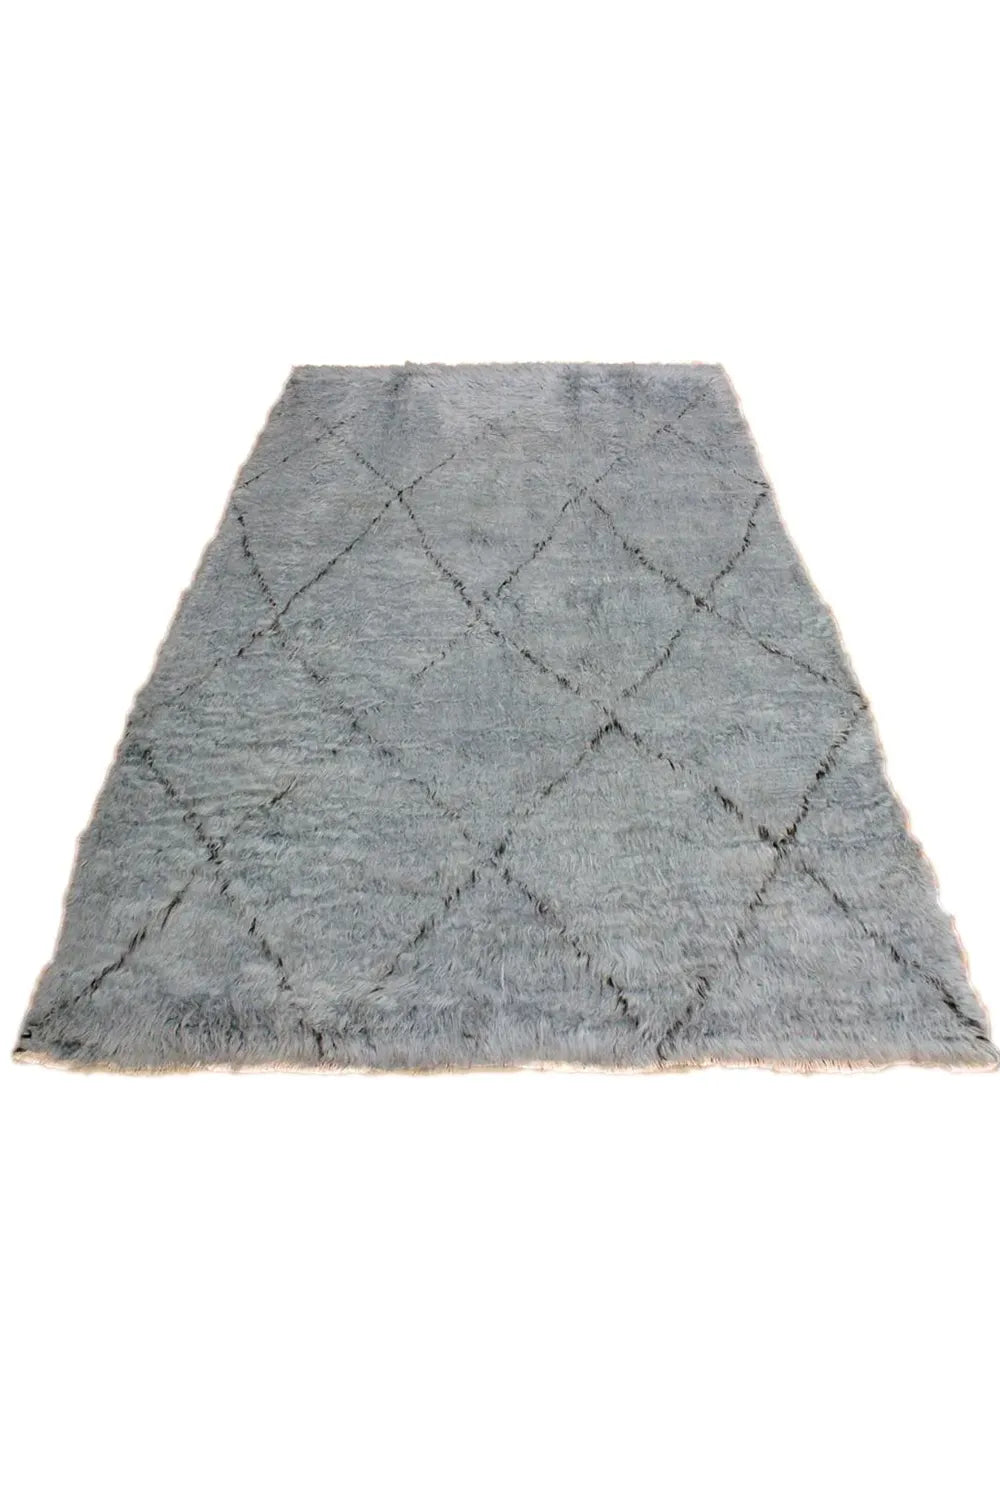 Luxurious dark gray diamond pattern on a premium shag wool rug.